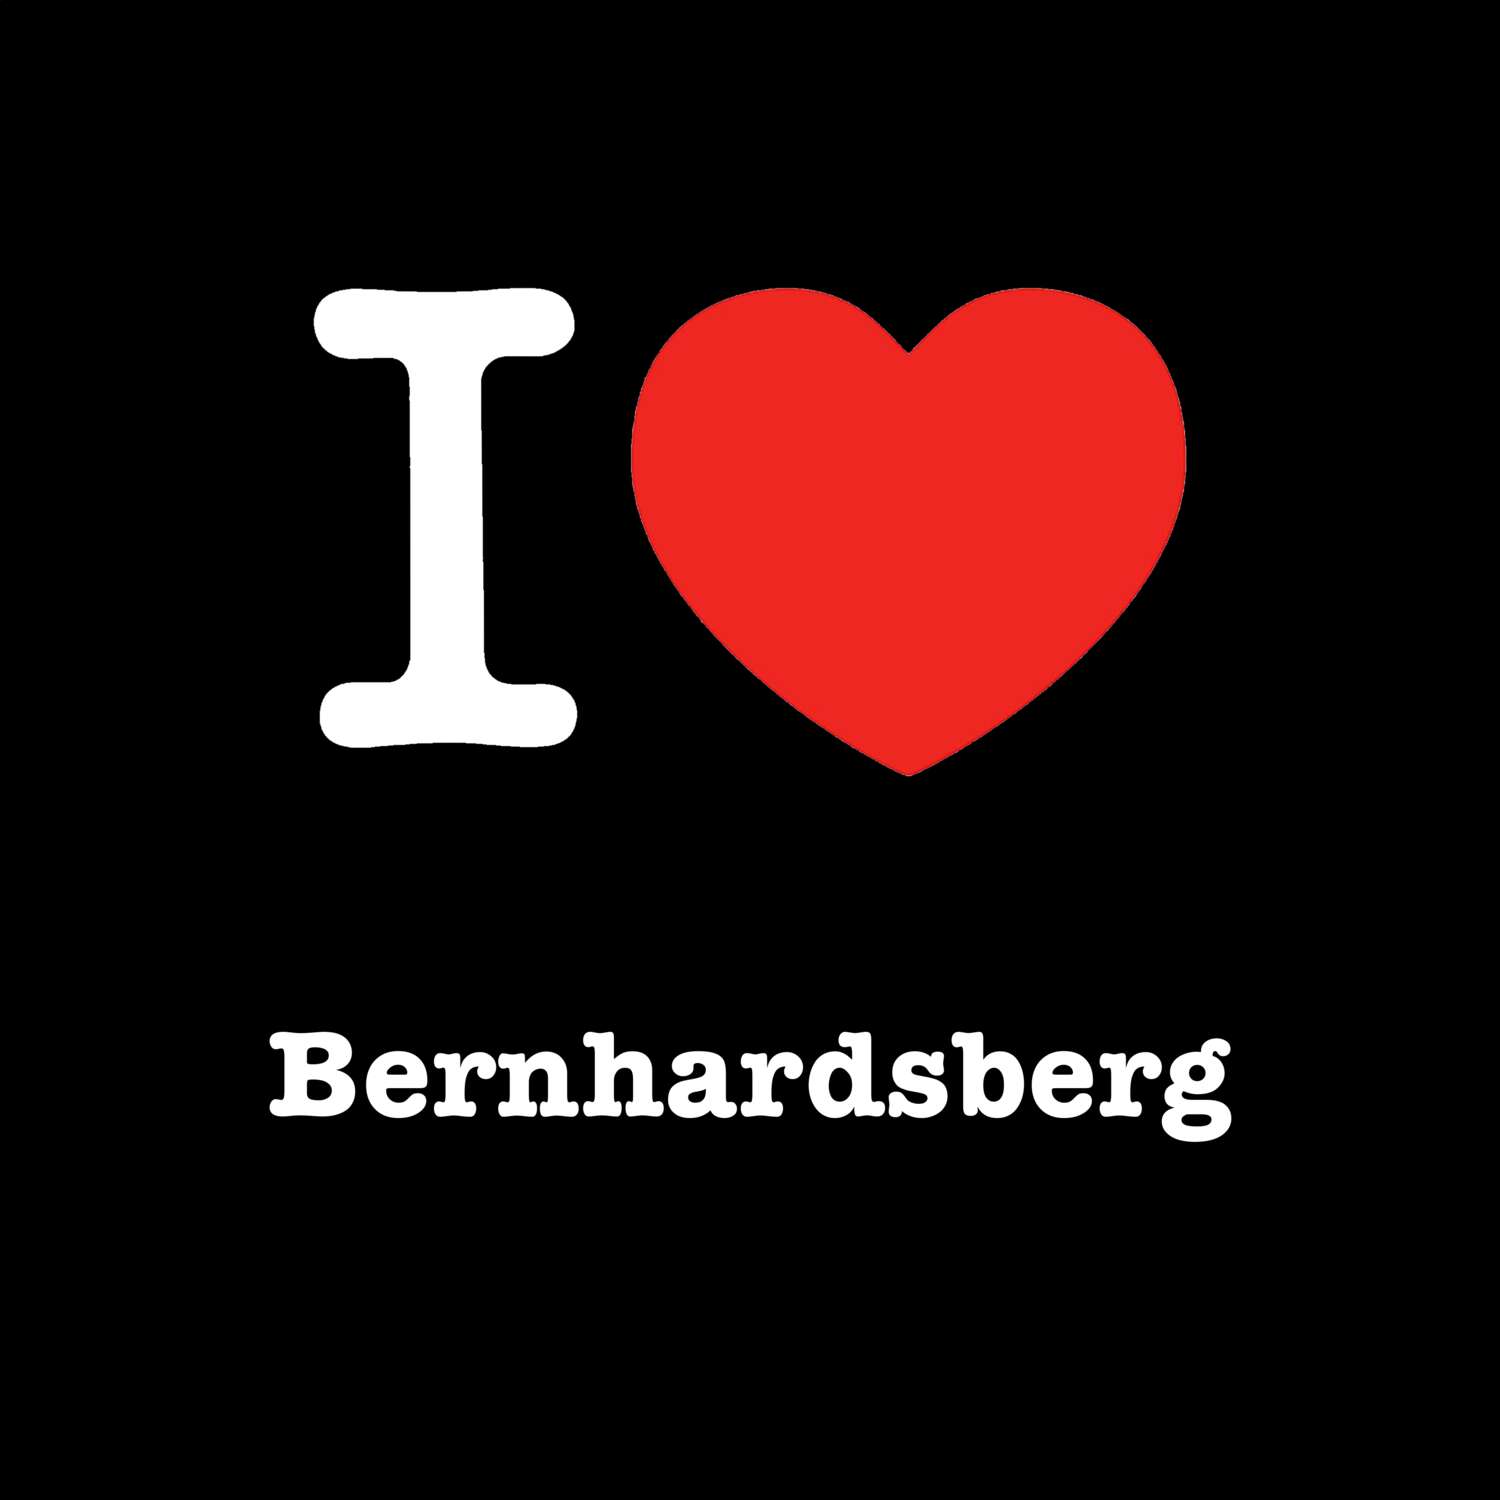 Bernhardsberg T-Shirt »I love«